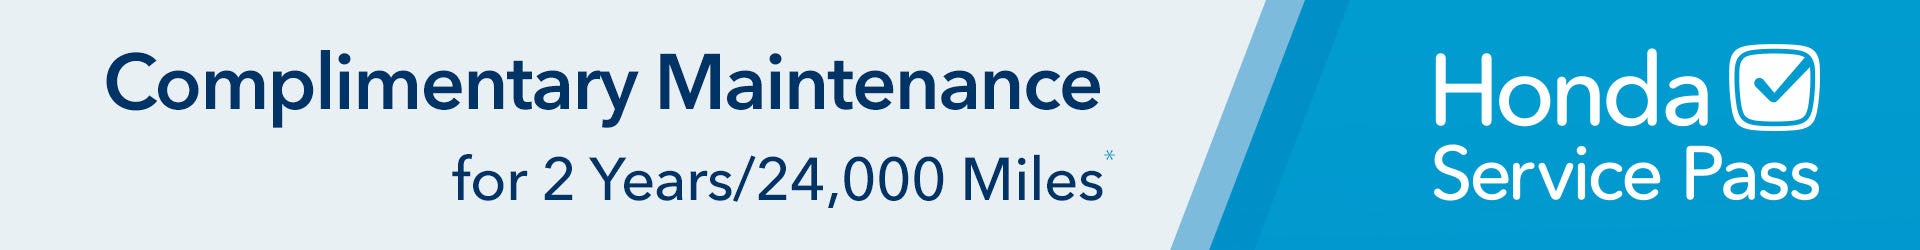 Complimentary Maintenance for 2 years / 24,000 Miles Honda Service Pass | Prescott Honda in Prescott AZ